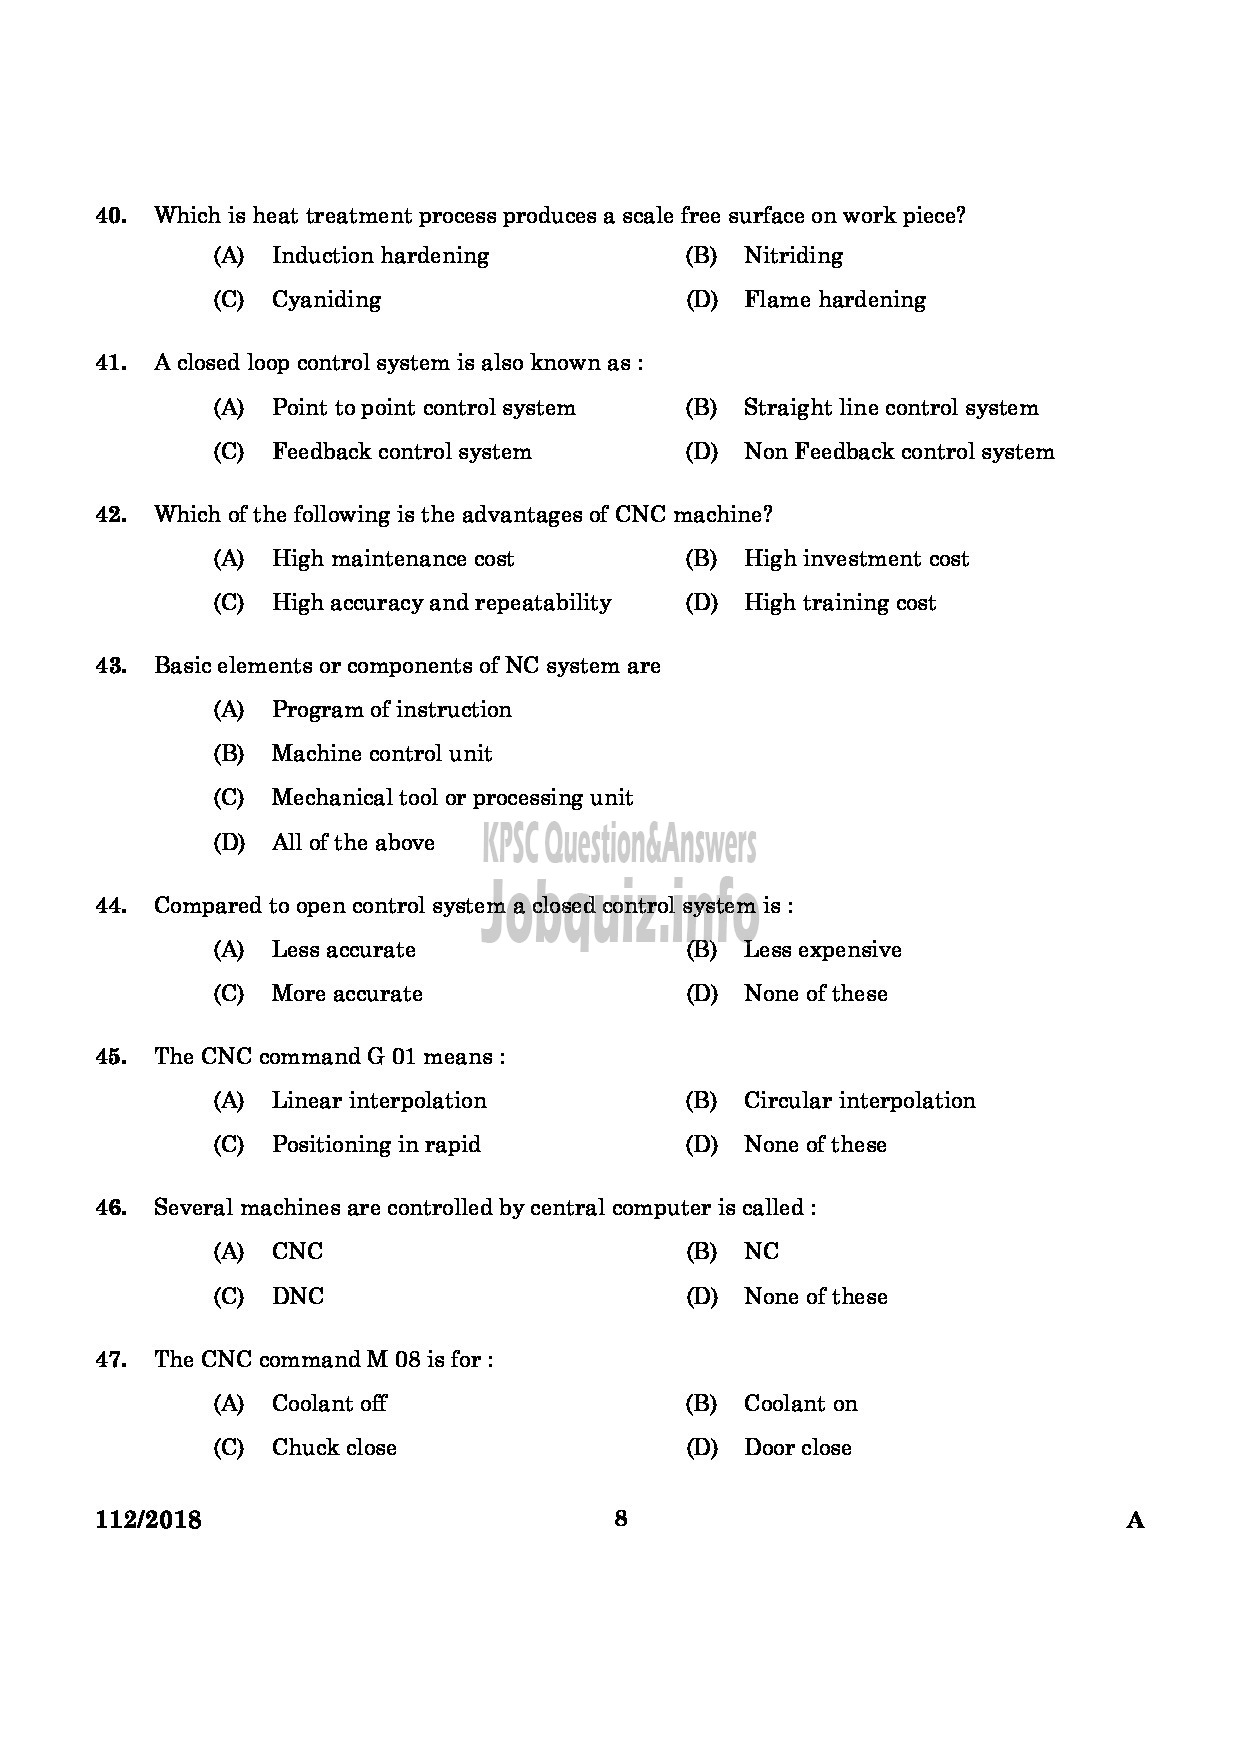 Kerala PSC Question Paper - JUNIOR INSTRUCTOR OPERATOR ADVNCED MACHINE TOOLS-6